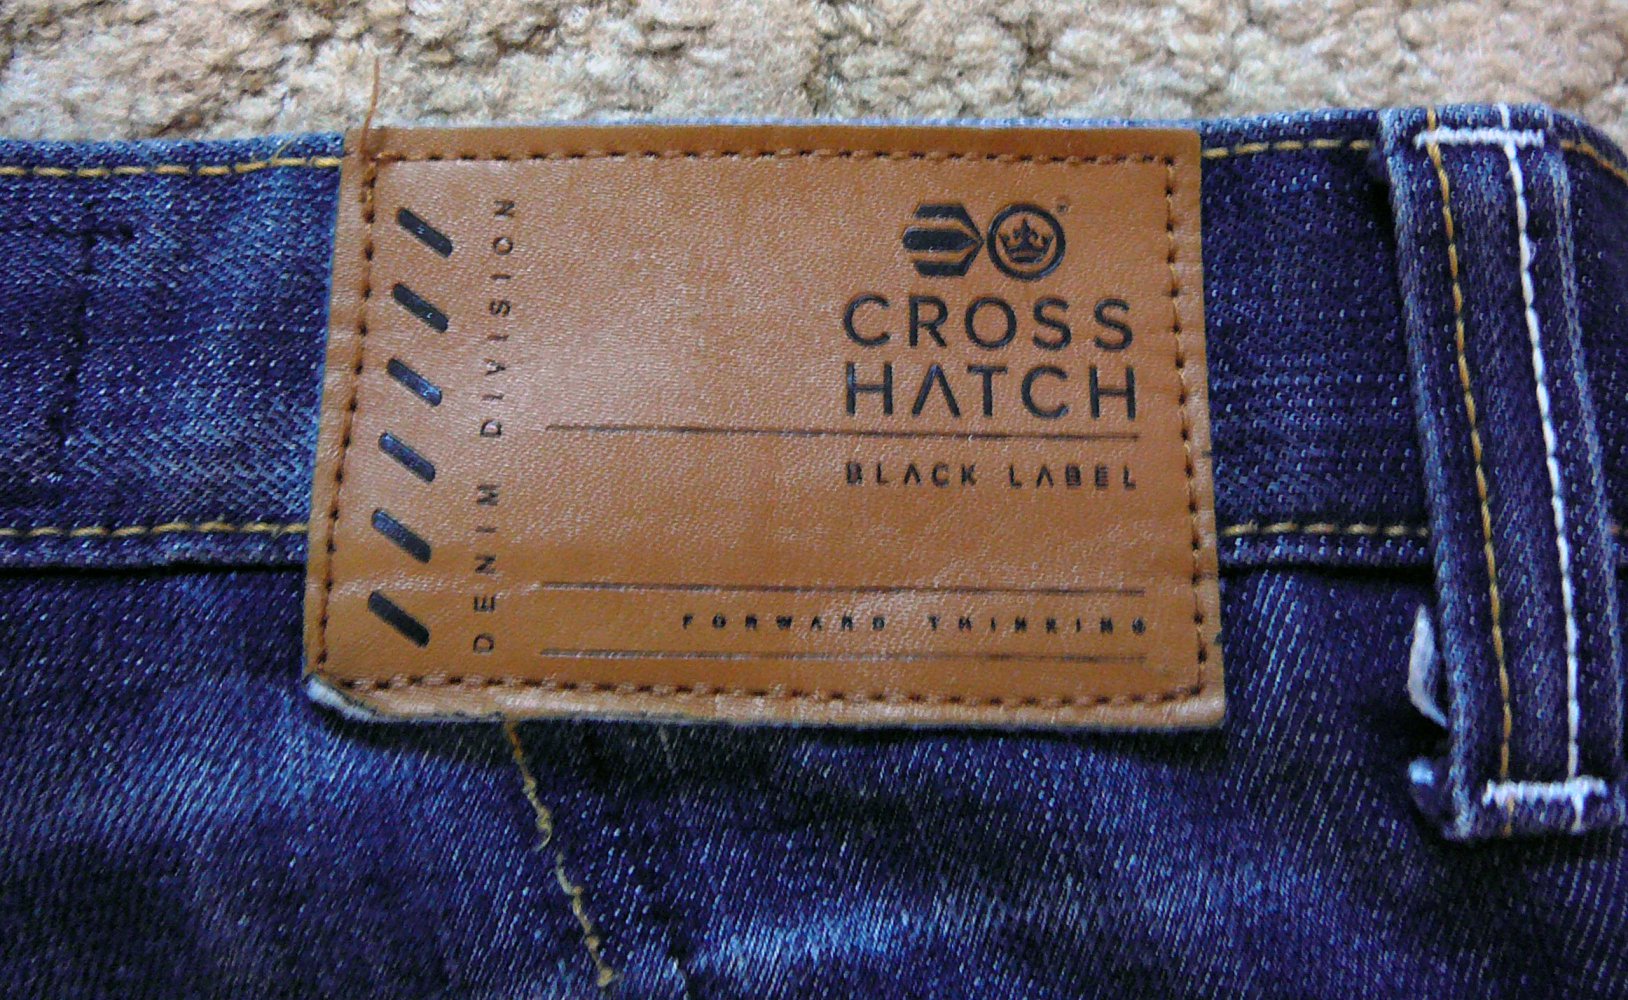 Cross Hatch BlackLabel Jeanshose Blau W 36 / L 32